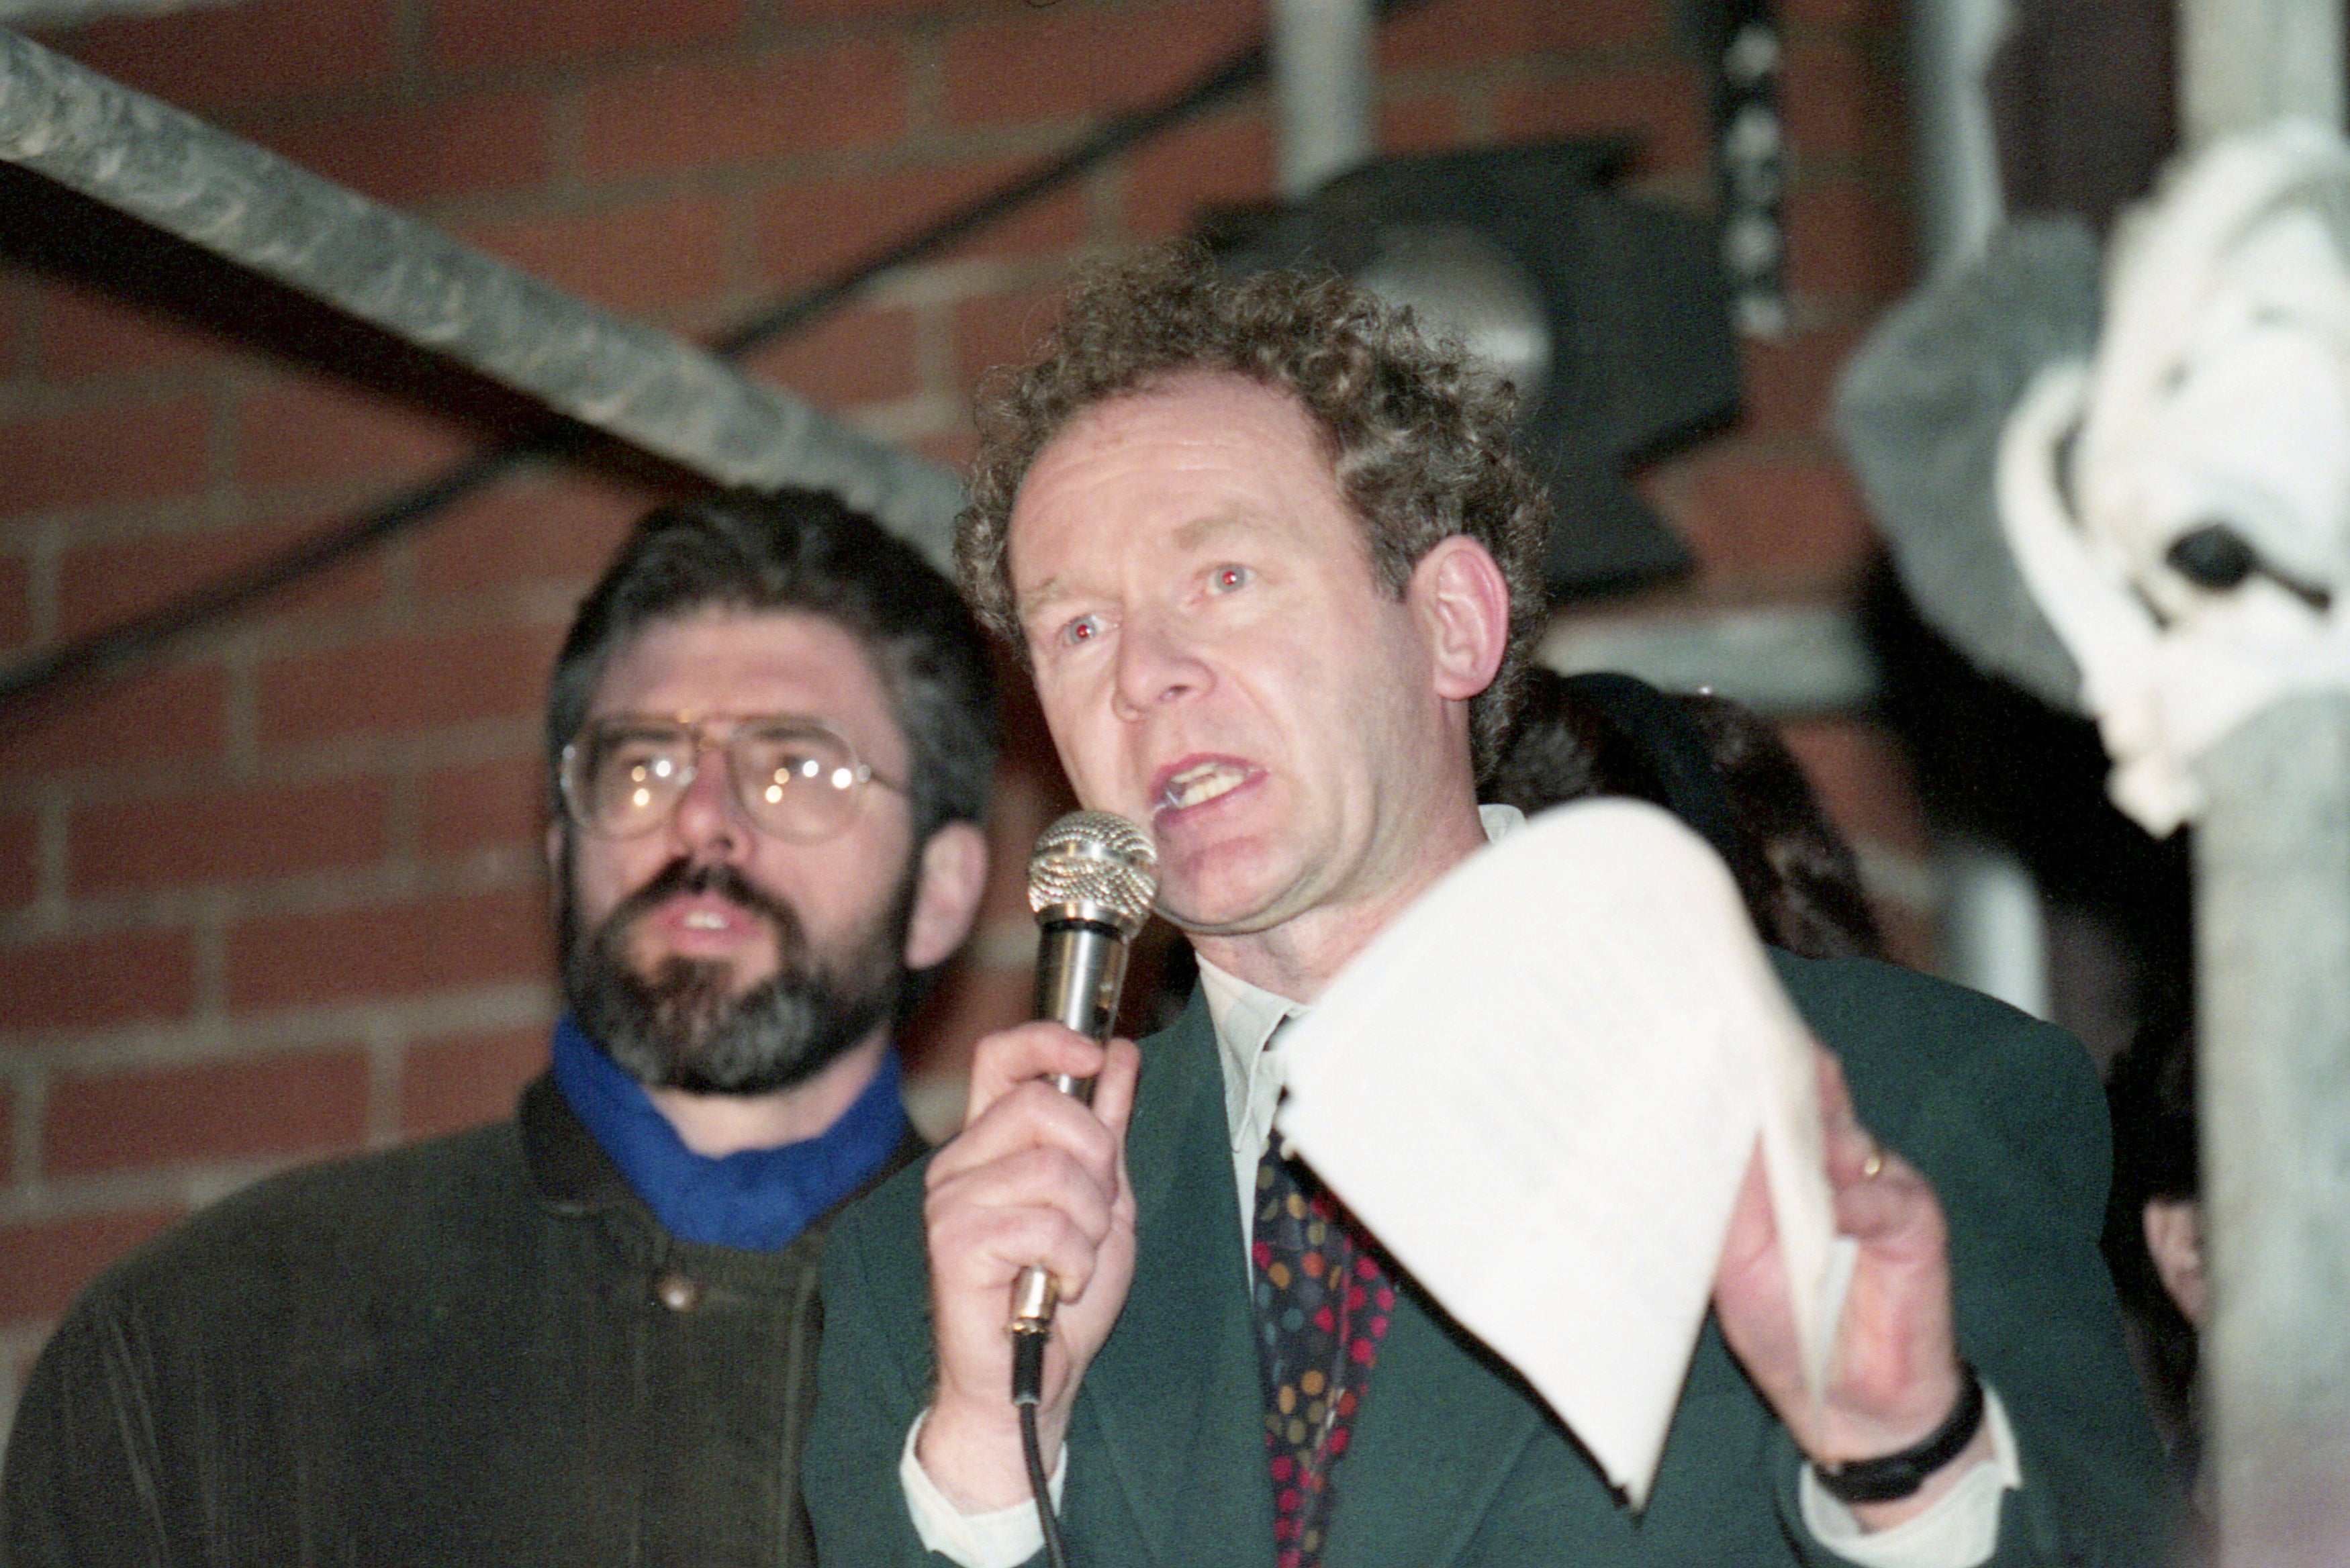 Sinn Fein deputy leader Martin McGuinness, with Gerry Adams behind him, in 1994